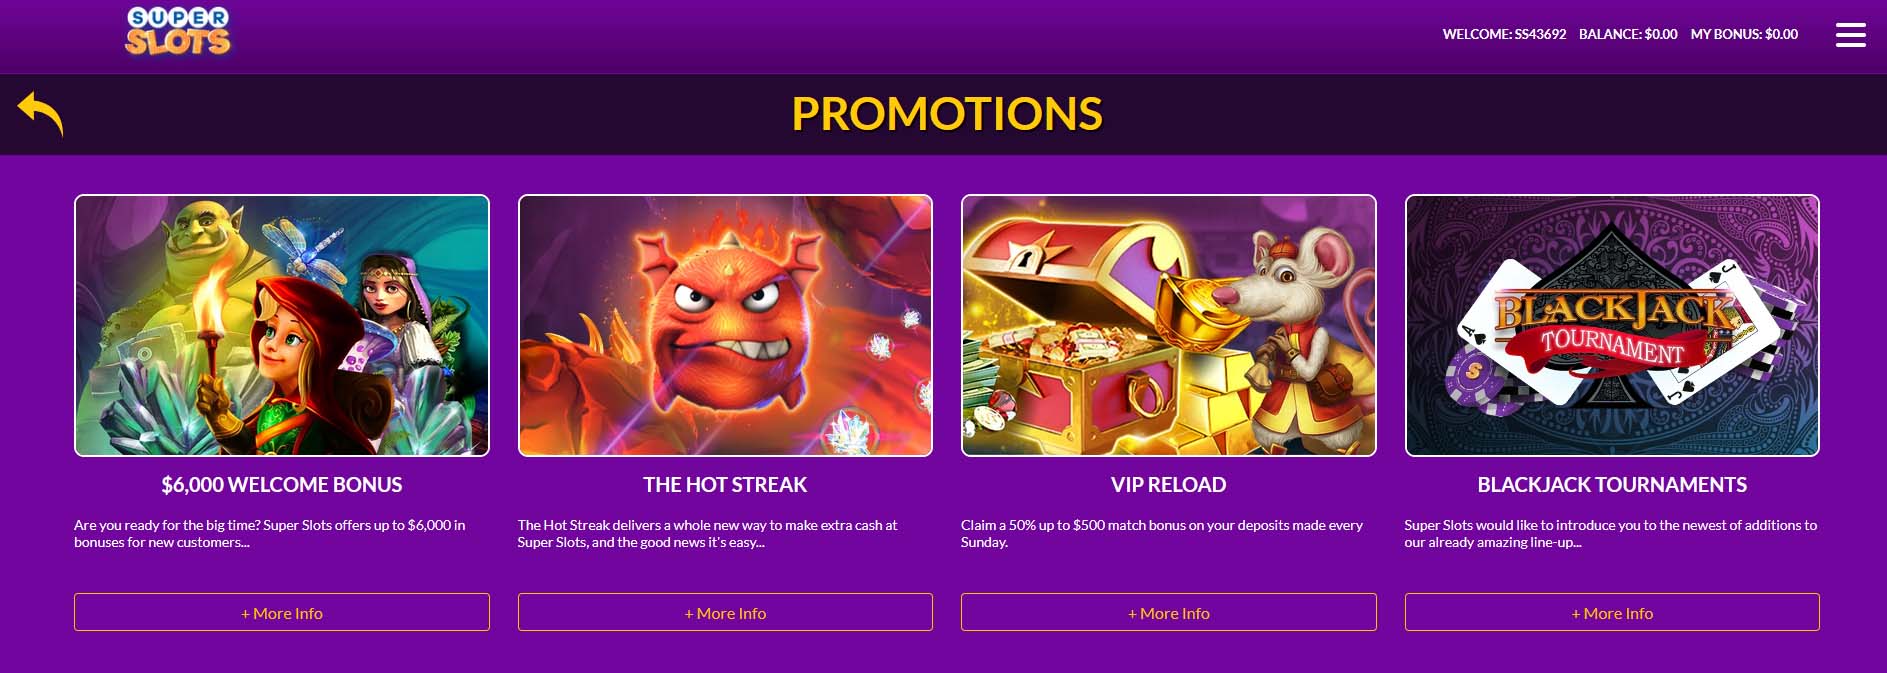 Super Slots Online Casino Promotions